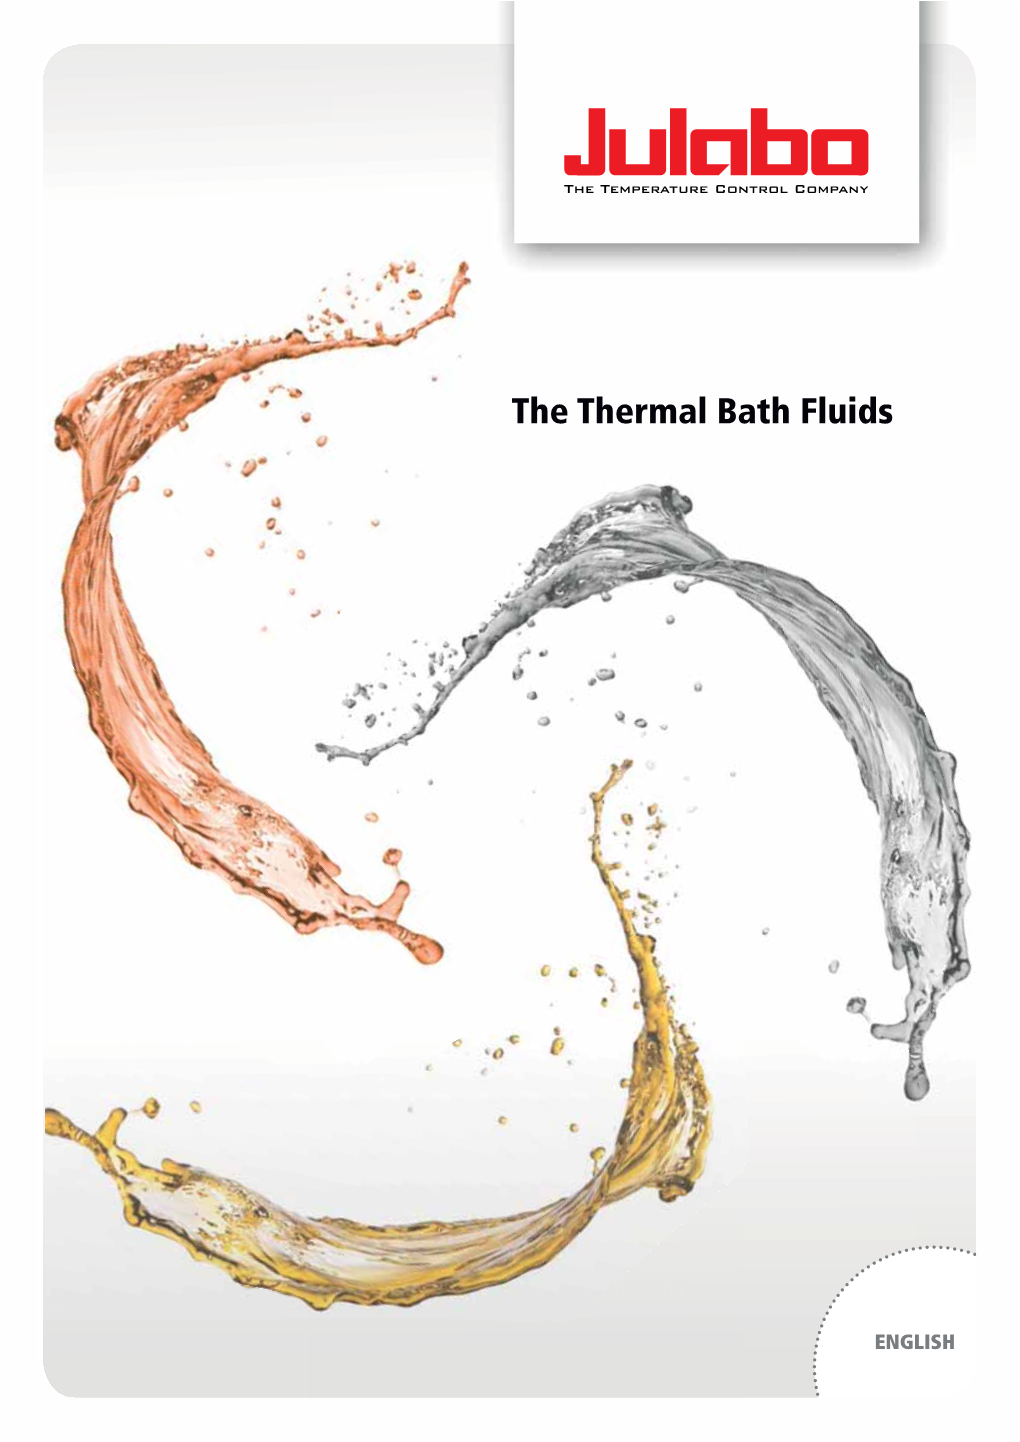 The Thermal Bath Fluids